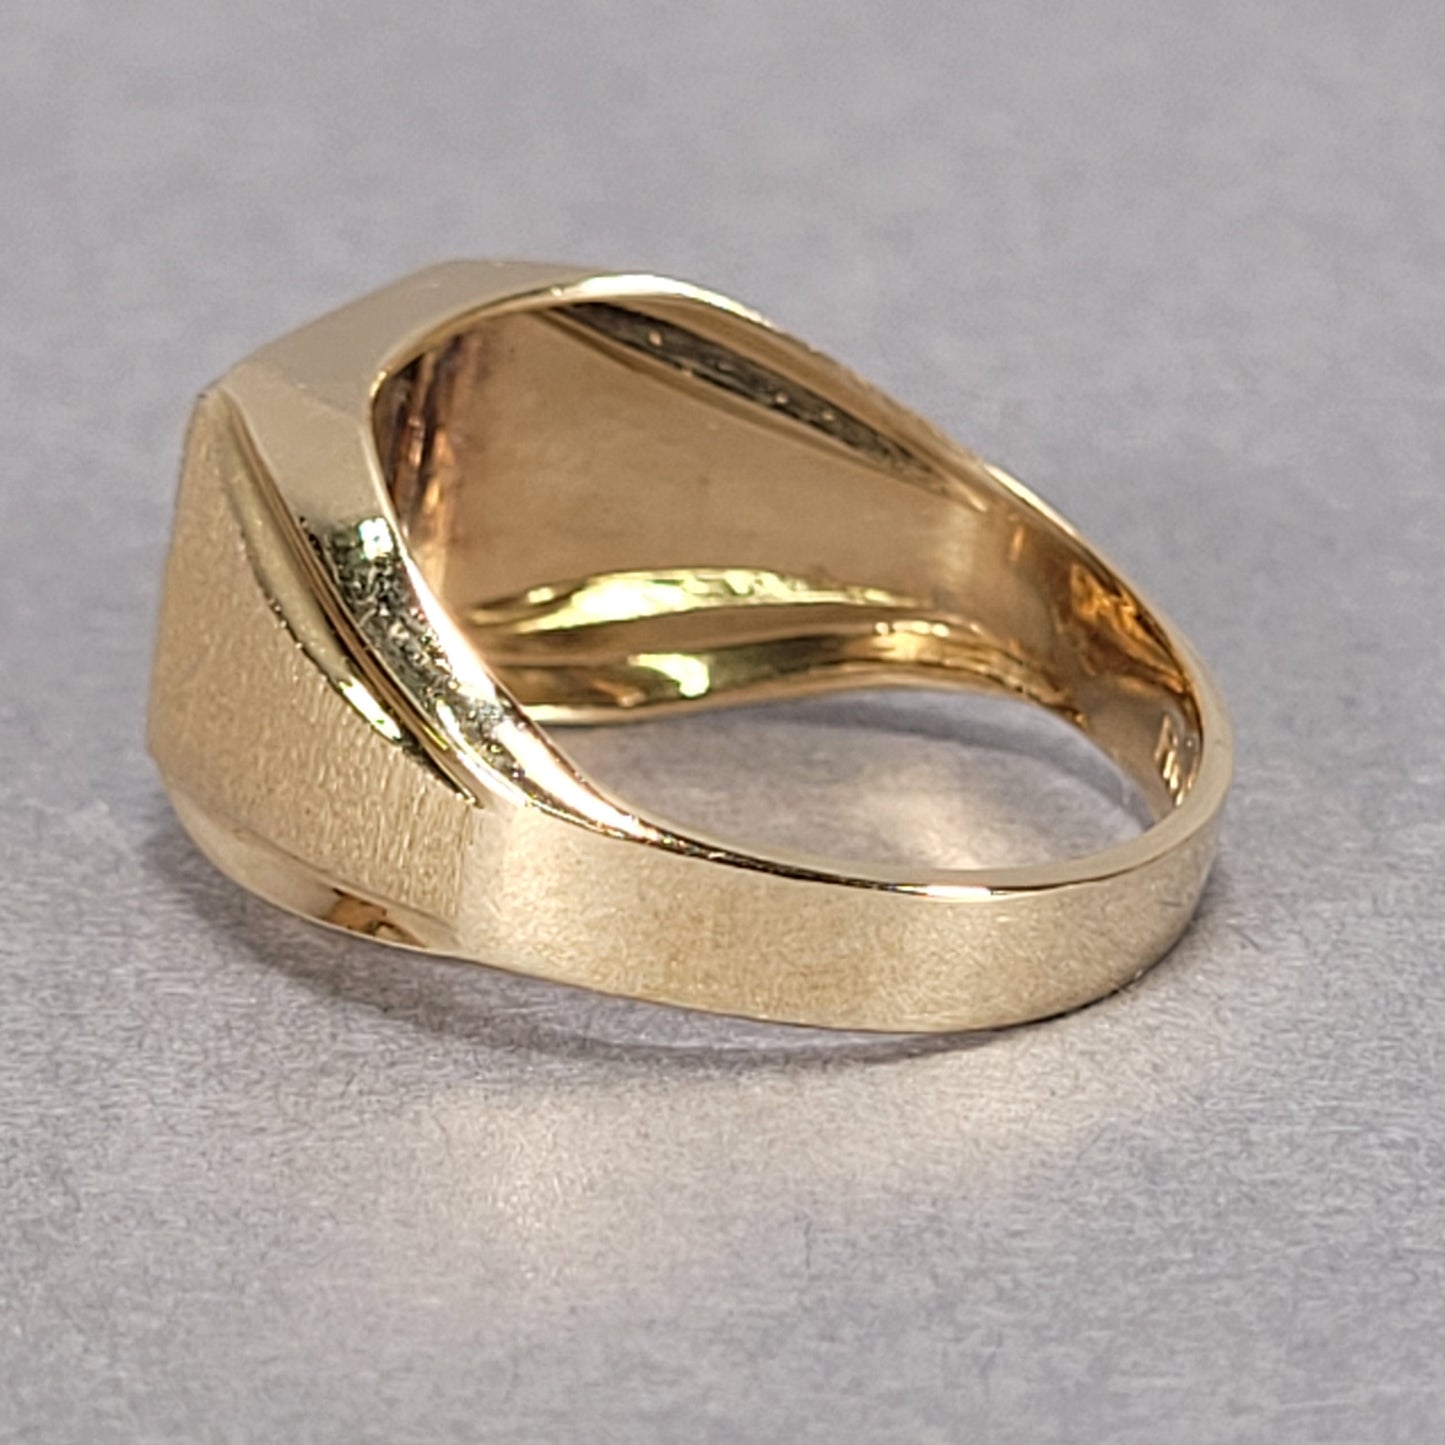 Men's 14k Yellow Gold Ring With 1 Diamond 5.9g